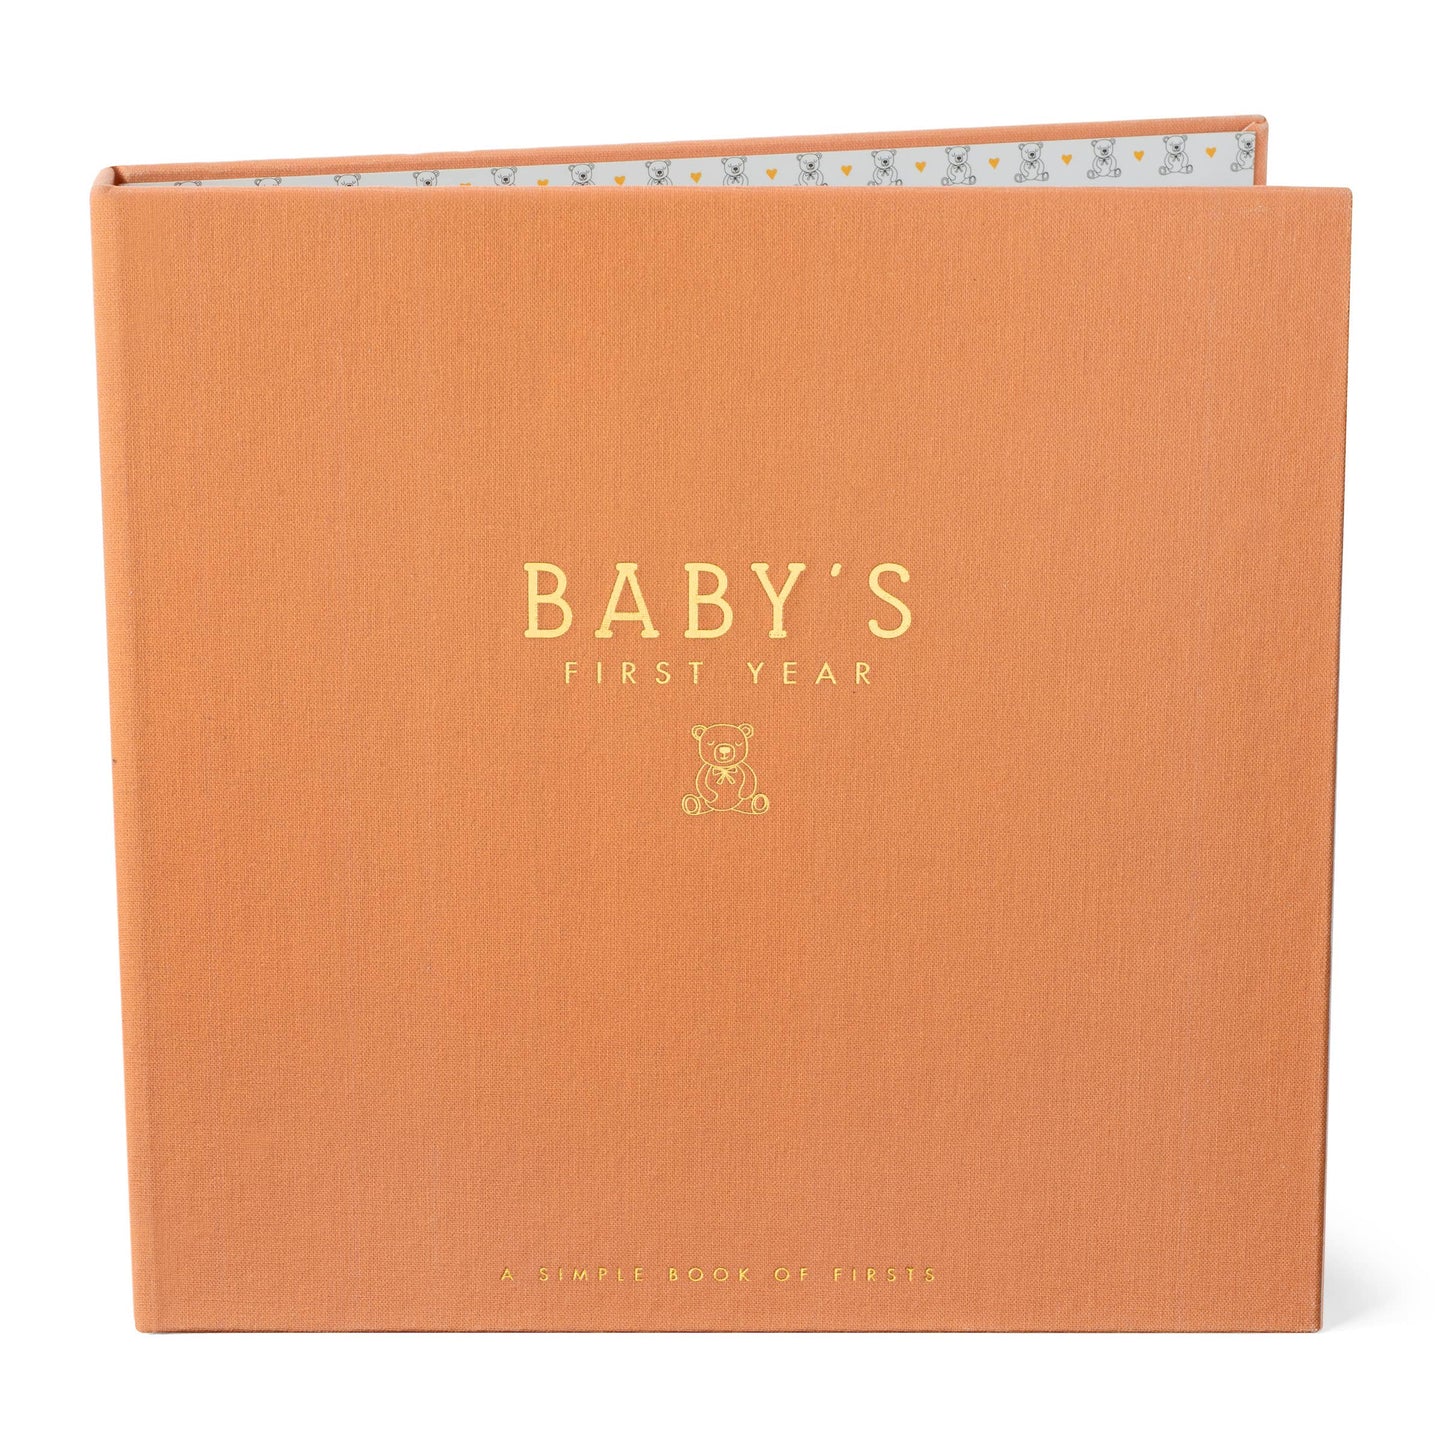 Lucy Darling - Teddy Bears Picnic - Luxury Memory Book